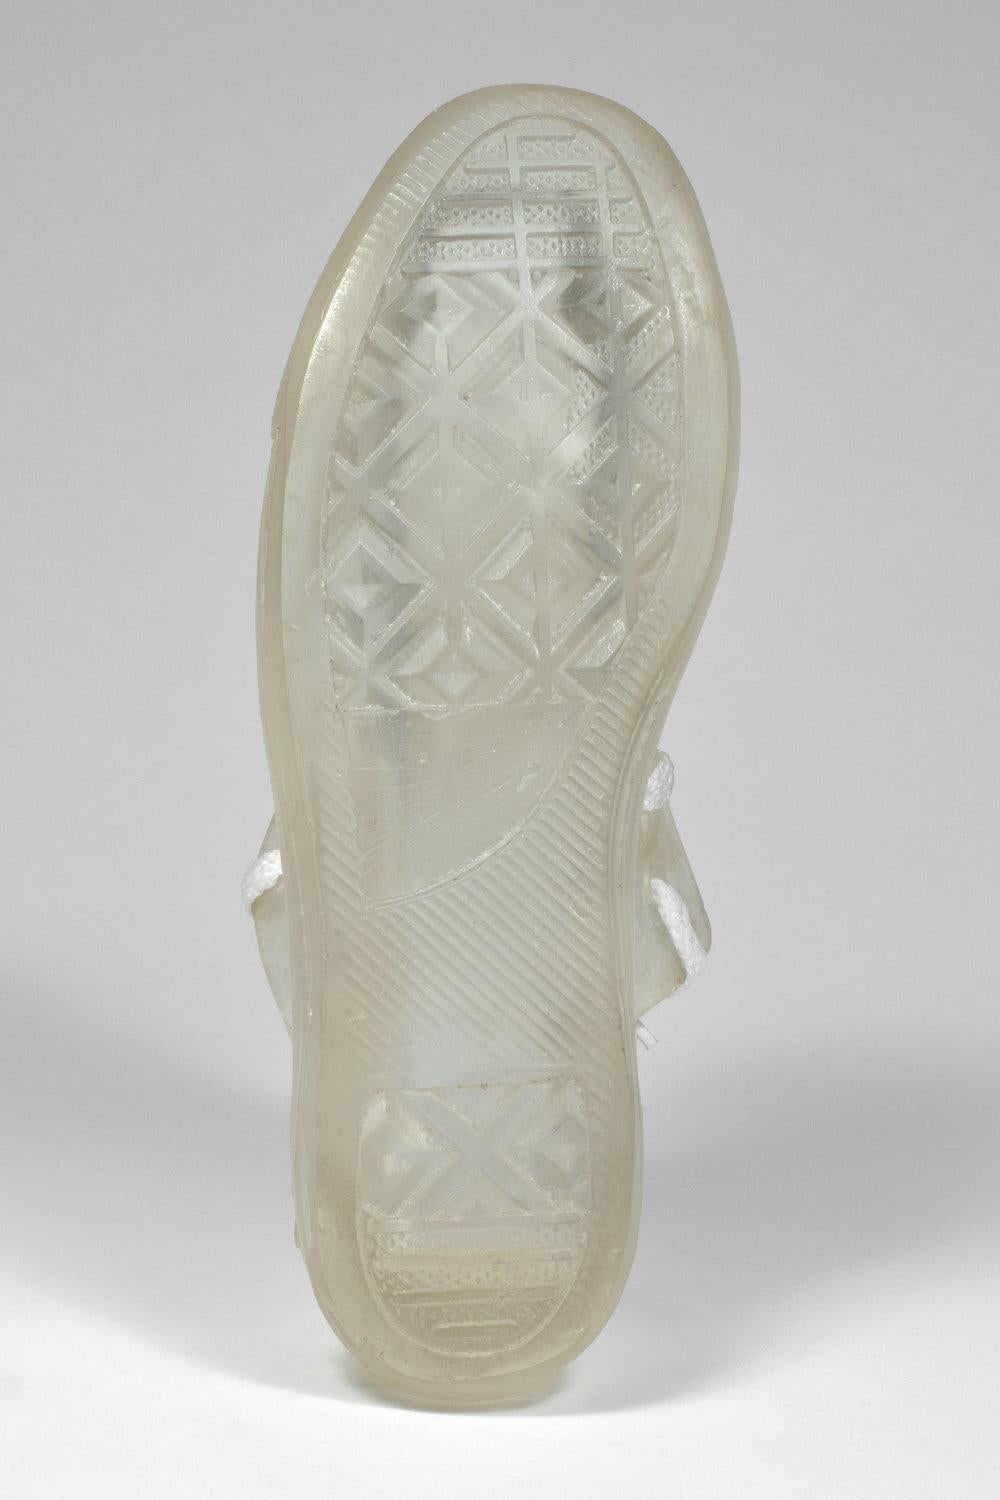 American Acrylic Tennis Shoe for Serving Croquettes Designed by José Andrés & Sami Hayek